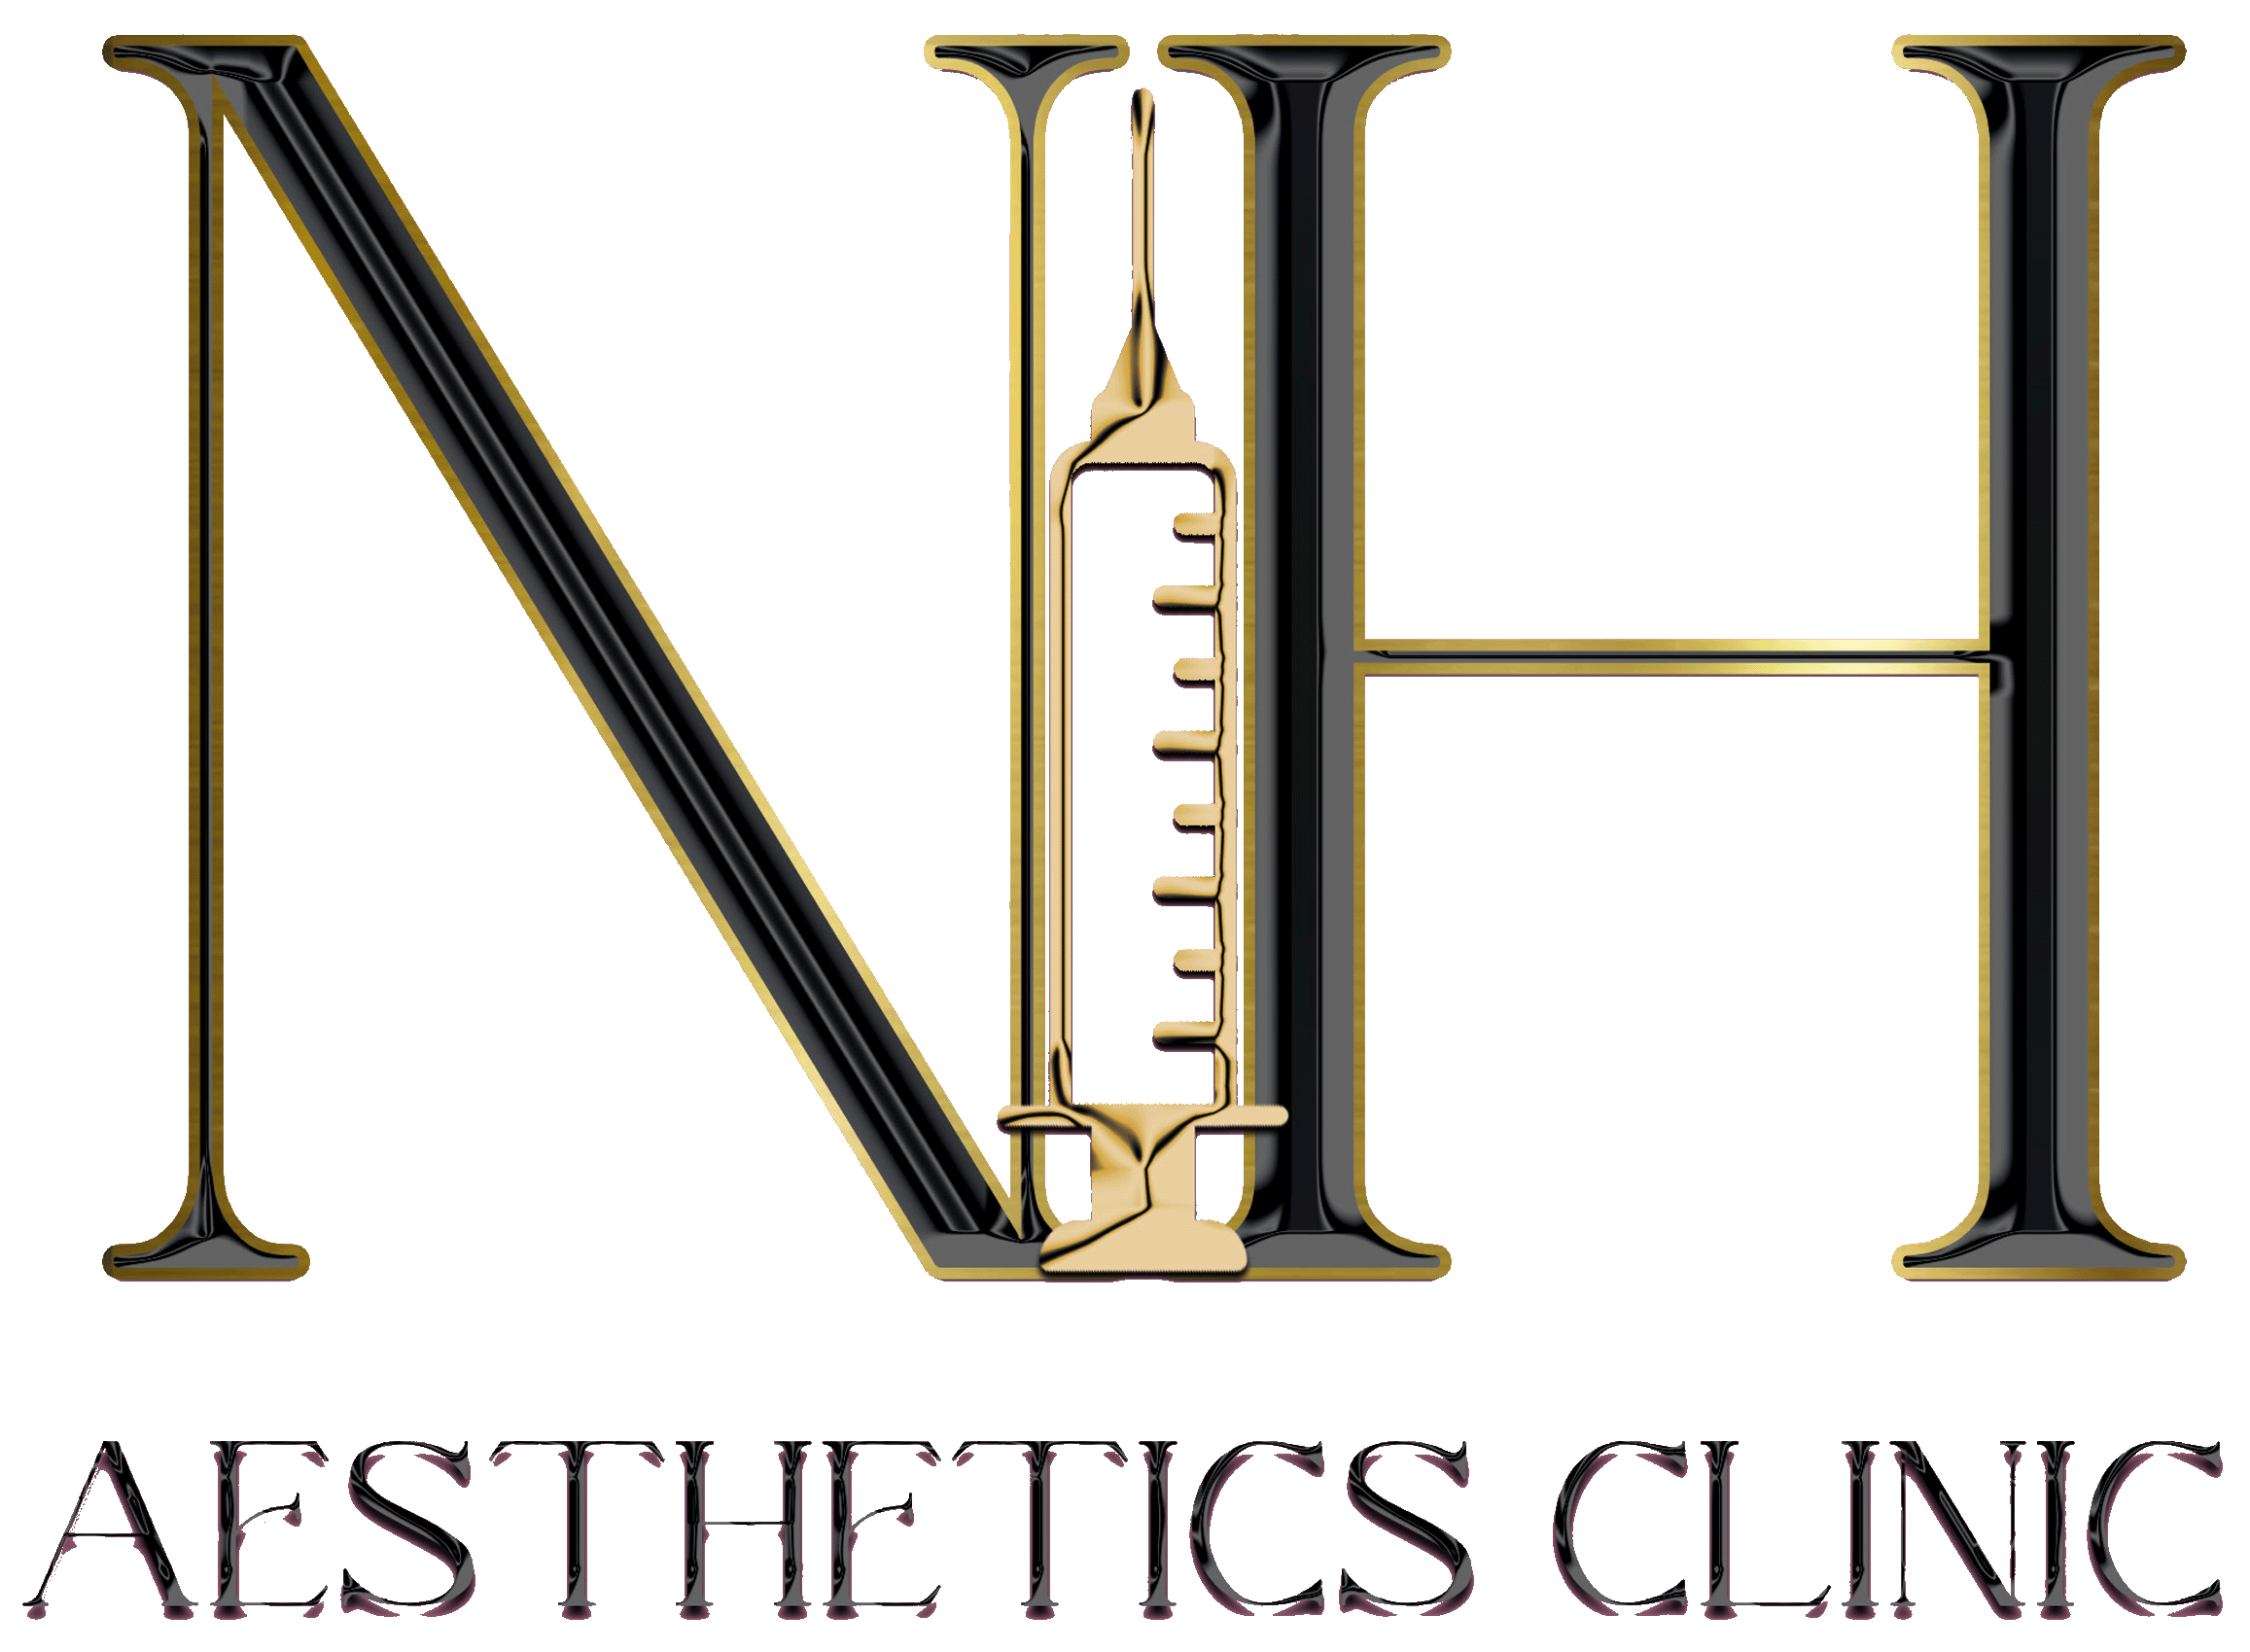 Nh aesthetics logo